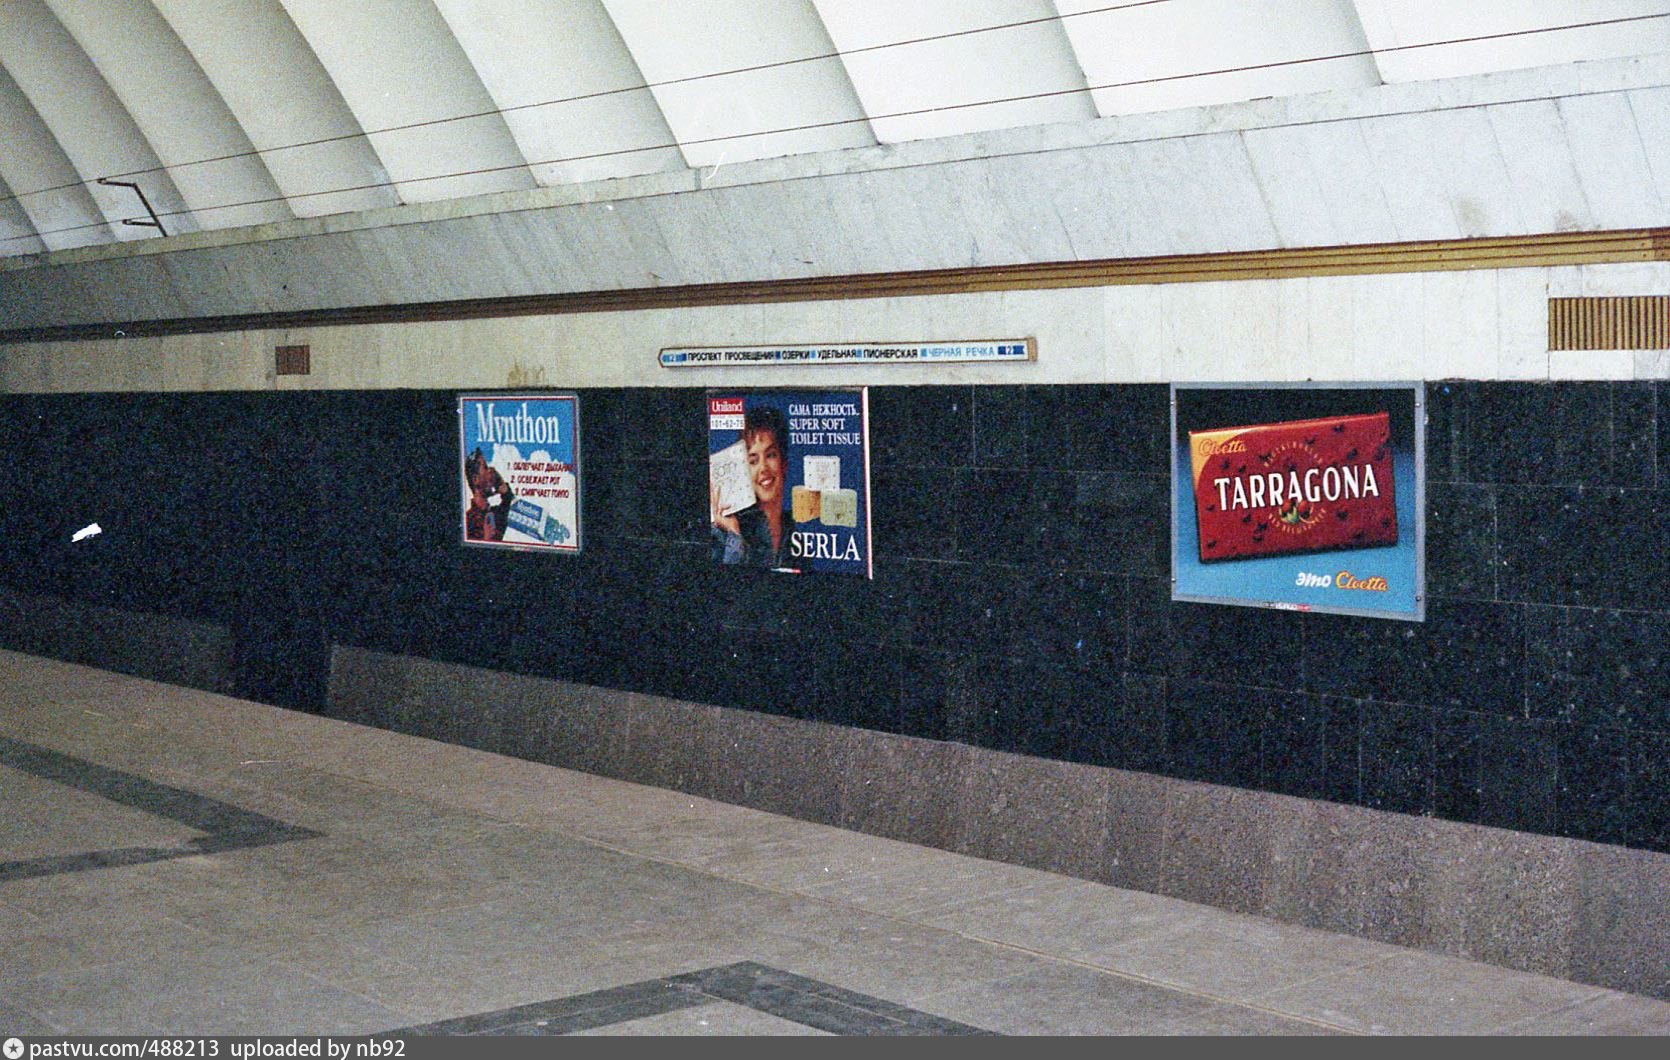 станция метро петроградская